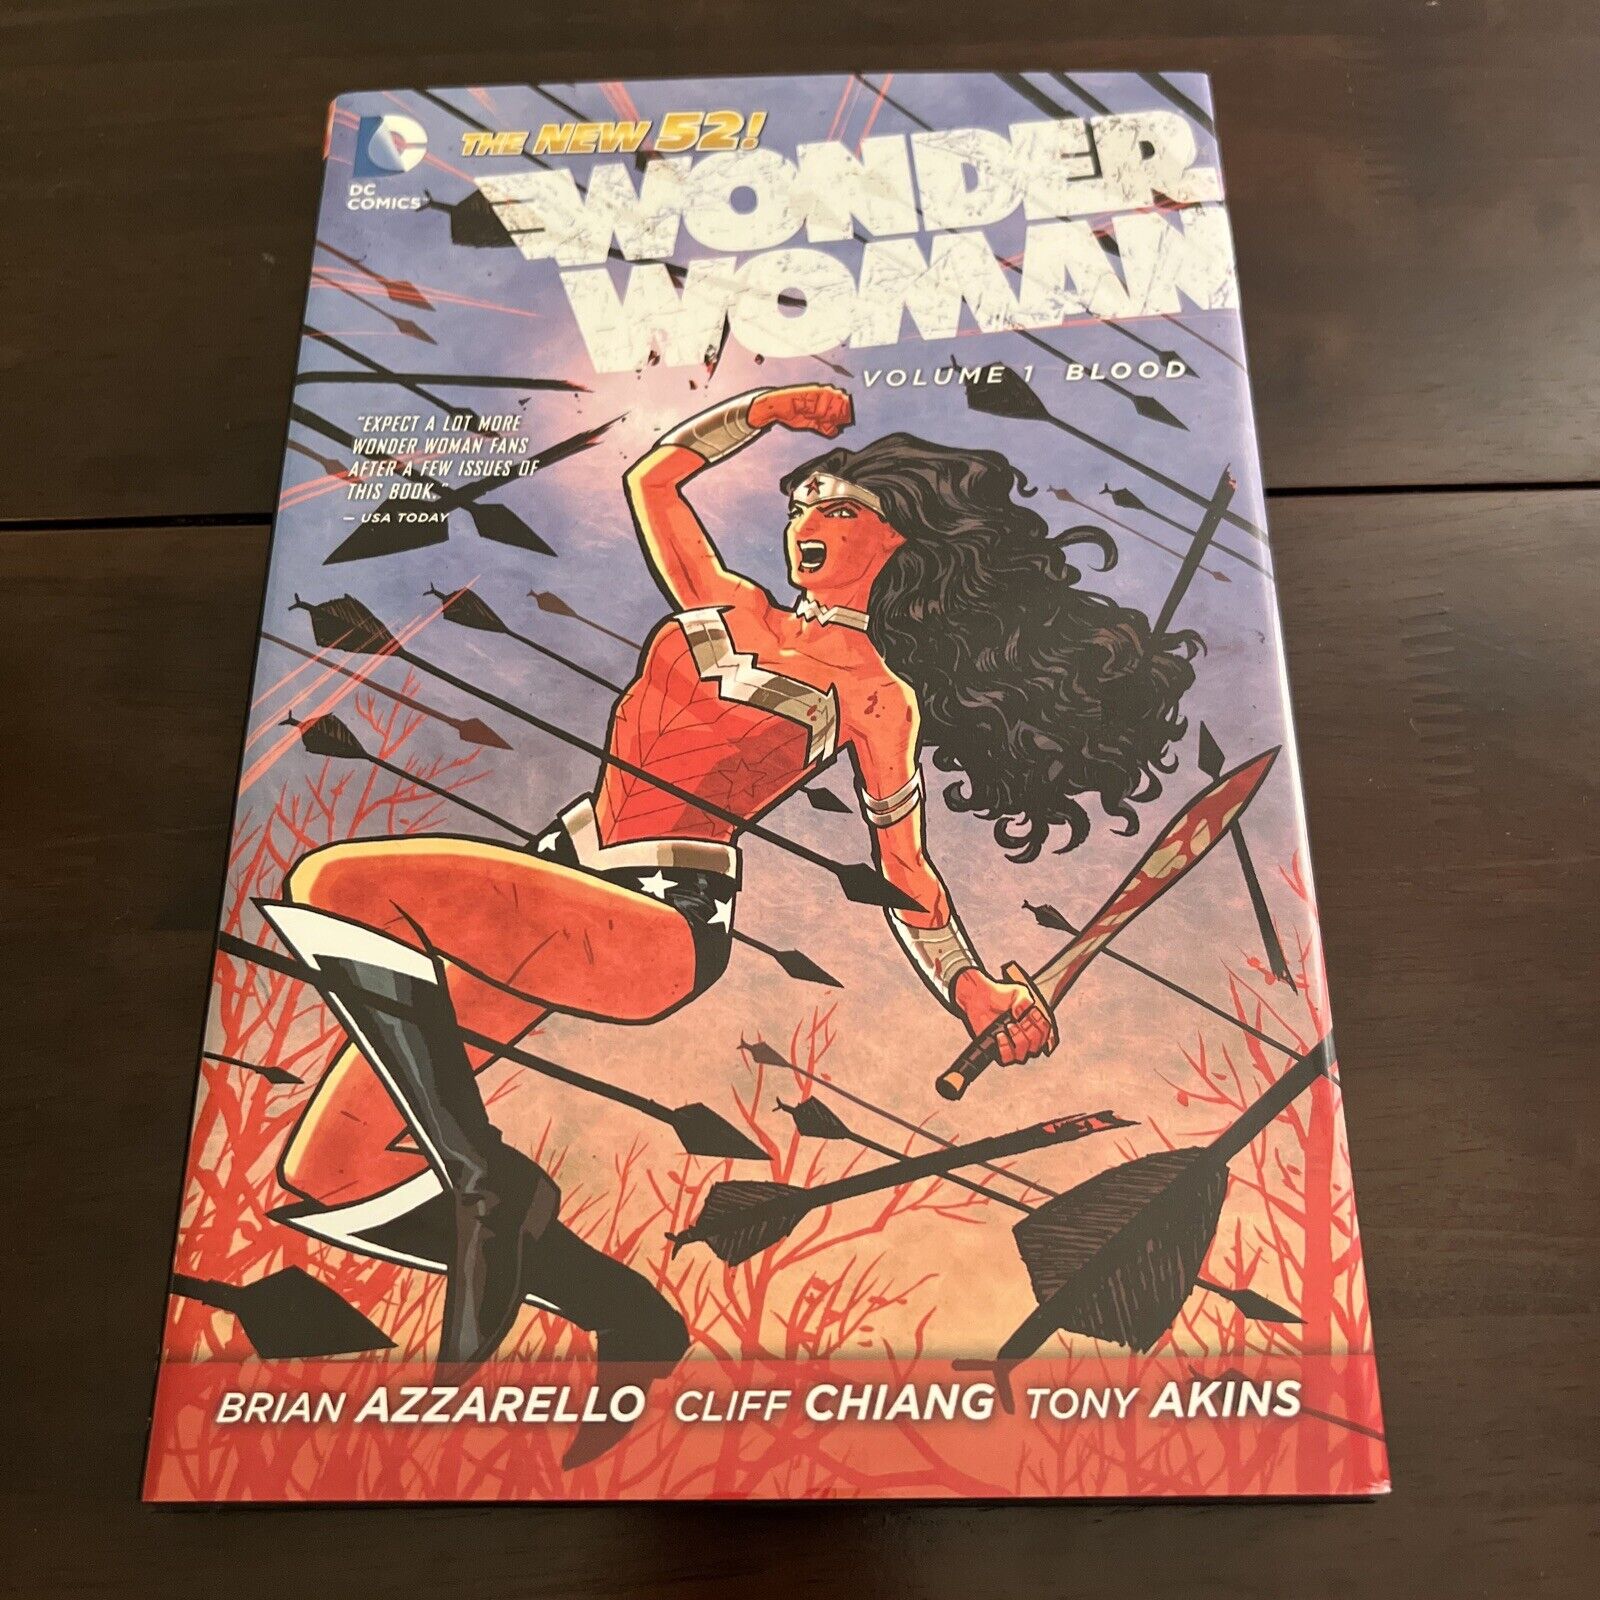 Wonder Woman Volume 1: Blood (The New 52) (DC Comics, July 2012) Brian Azzarello